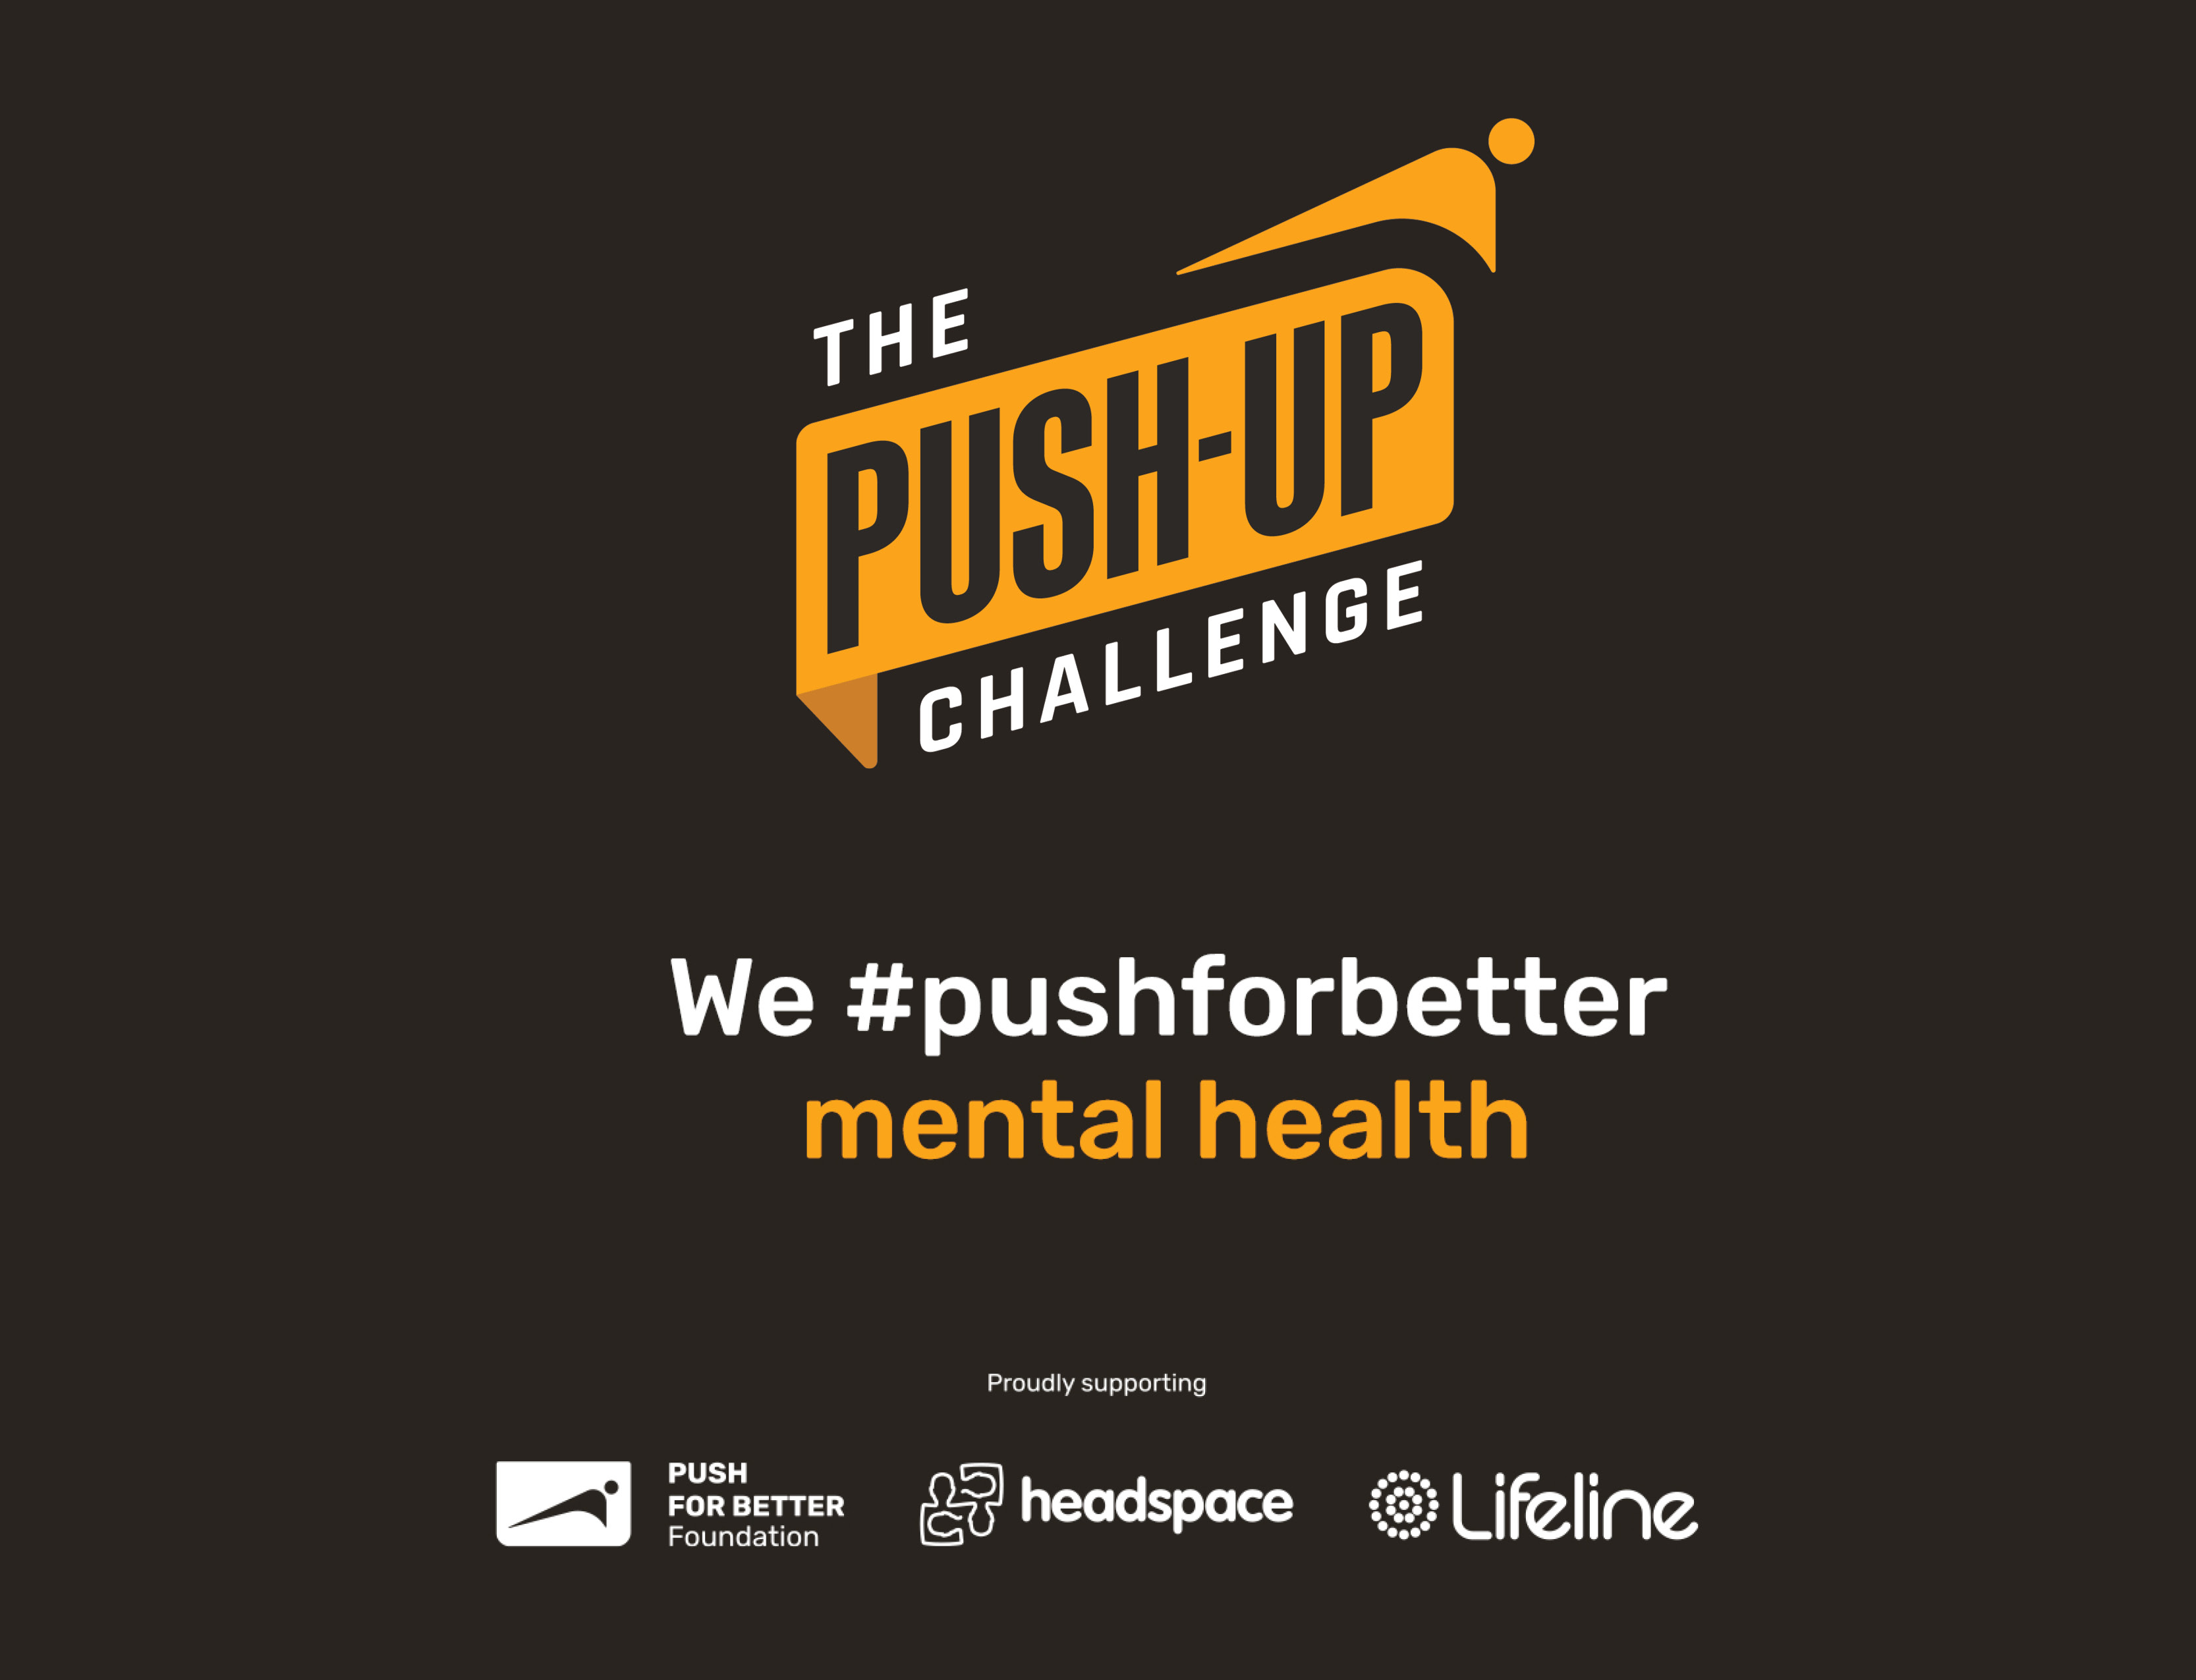 The Push Up Challenge